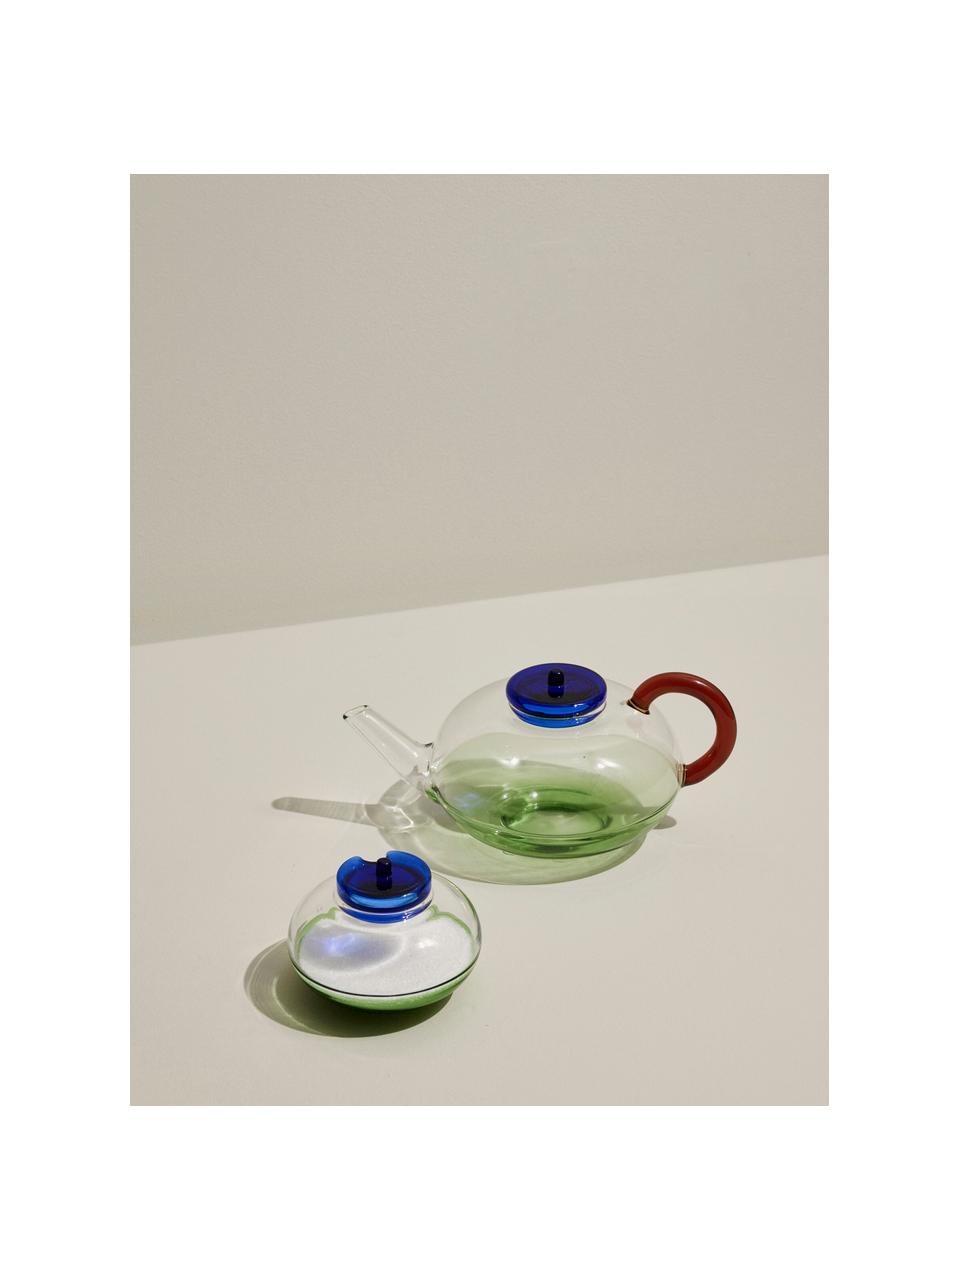 Zuccheriera in vetro soffiato NoRush, Vetro, Blu scuro, verde, trasparente, Ø 10 x Alt. 8 cm